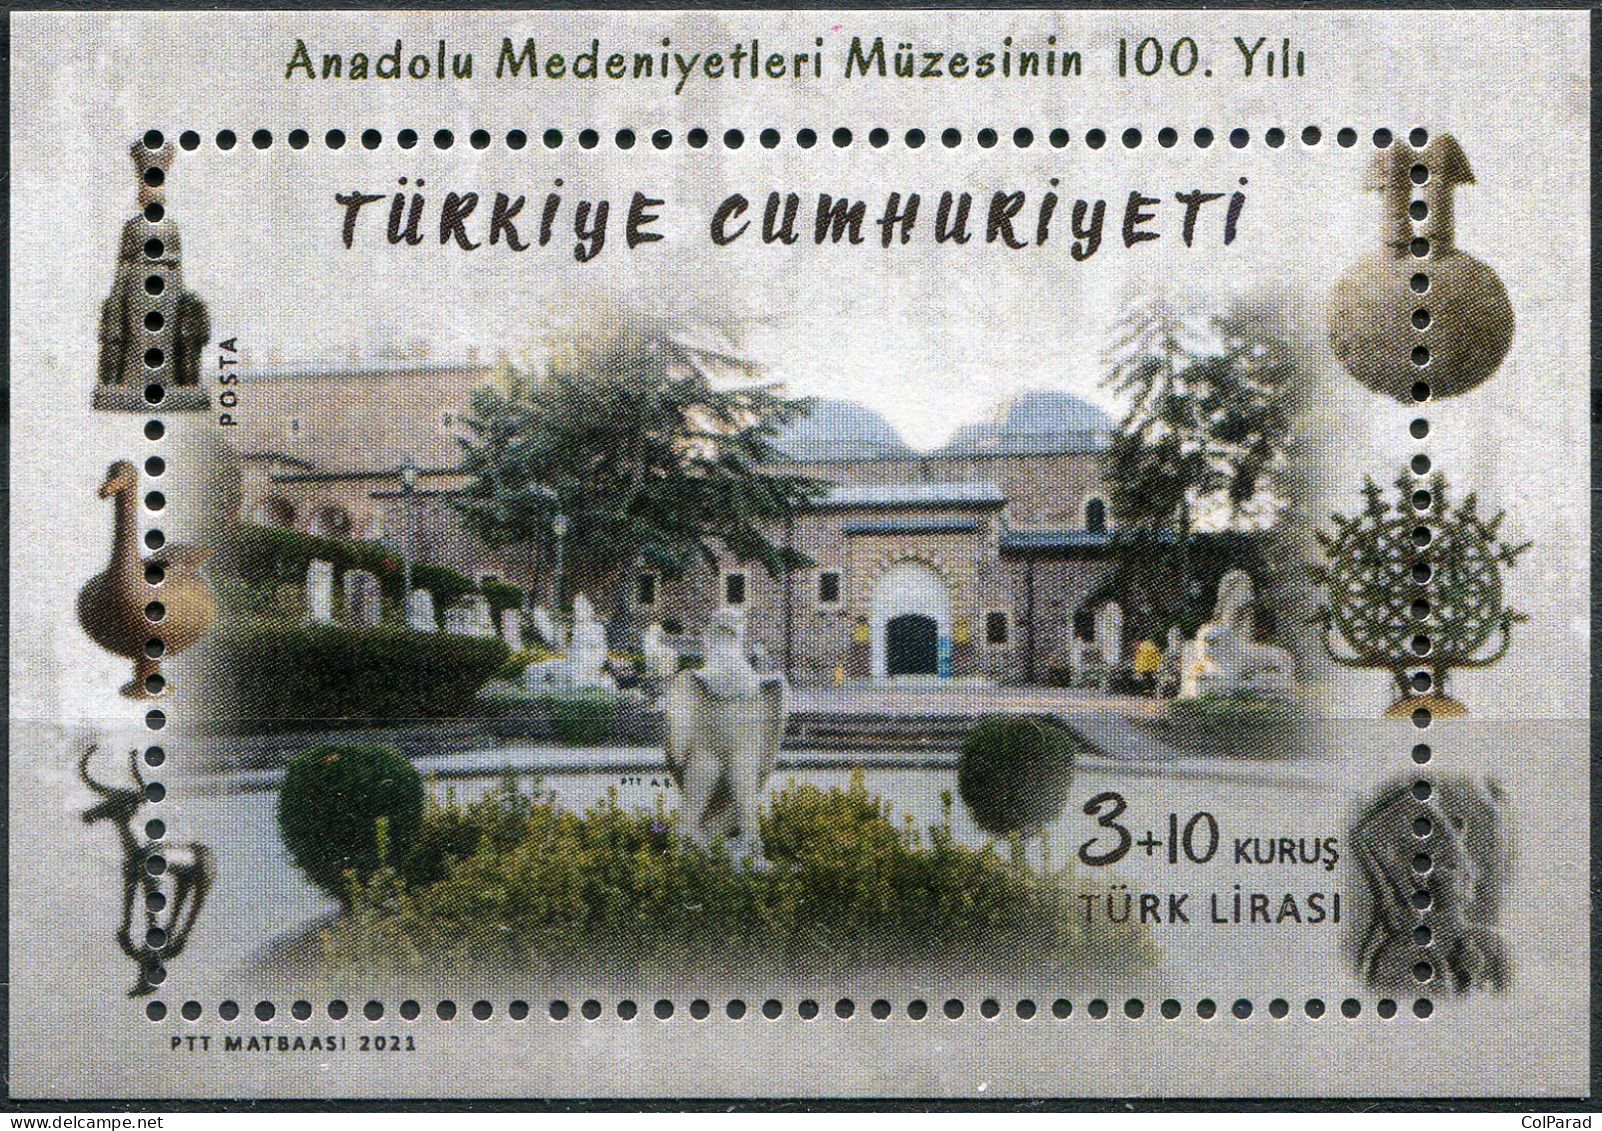 TURKEY - 2021 - SOUVENIR SHEET MNH ** - Museum Of Anatolian Civilizations - Nuevos